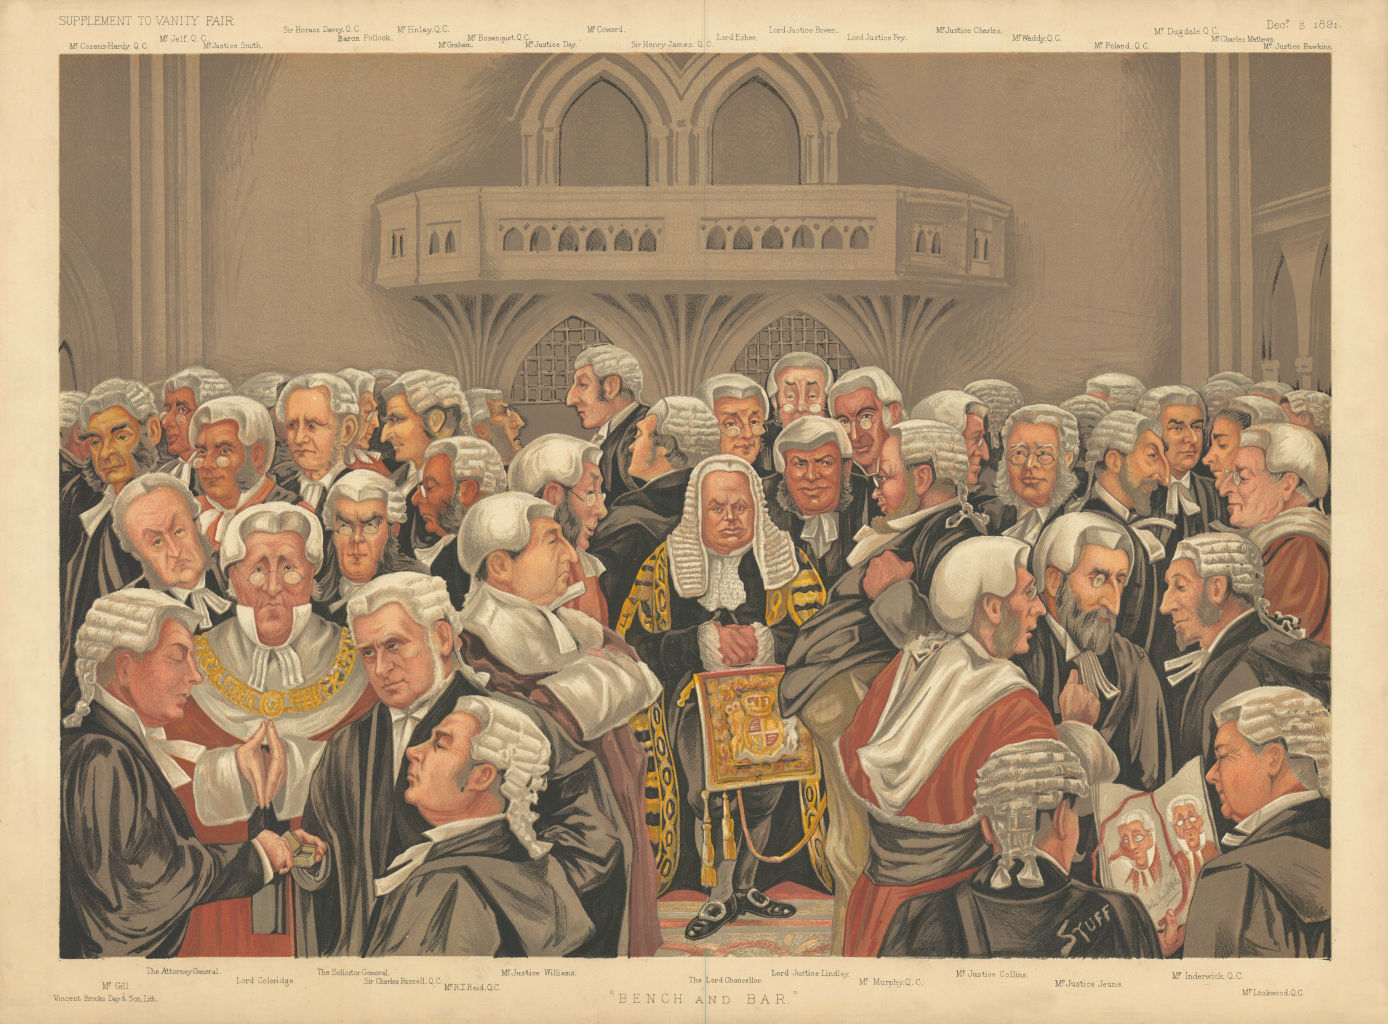 VANITY FAIR SPY CARTOON FOLIO. Group of jurists 'Bench & Bar' By STUFF. Law 1891